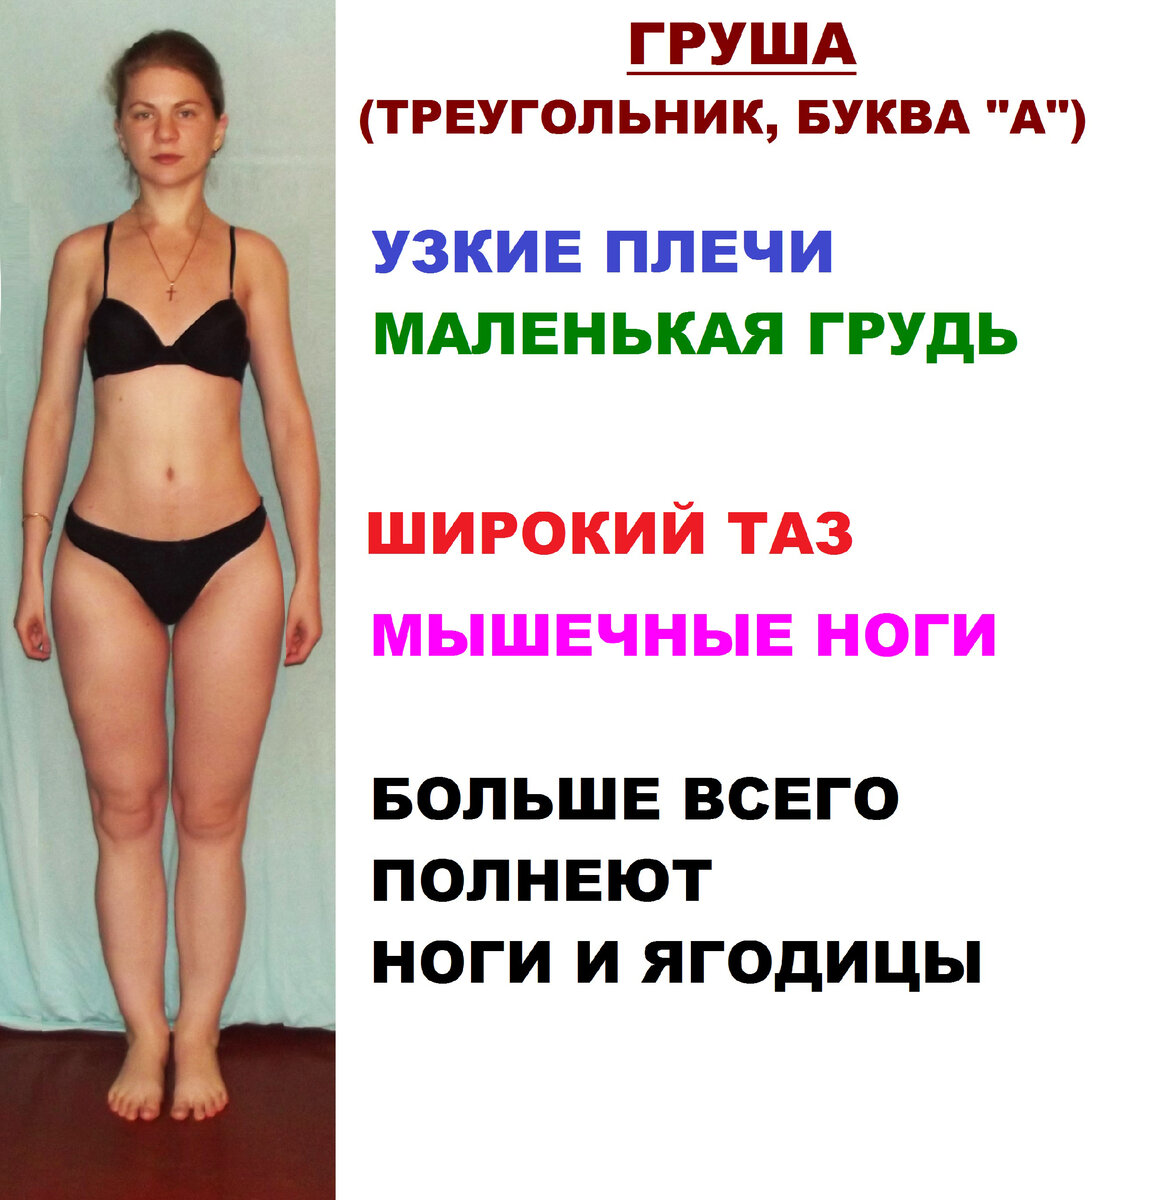 Секс девушки с широким тазом зад (78 фото) - порно и фото голых на ecomamochka.ru